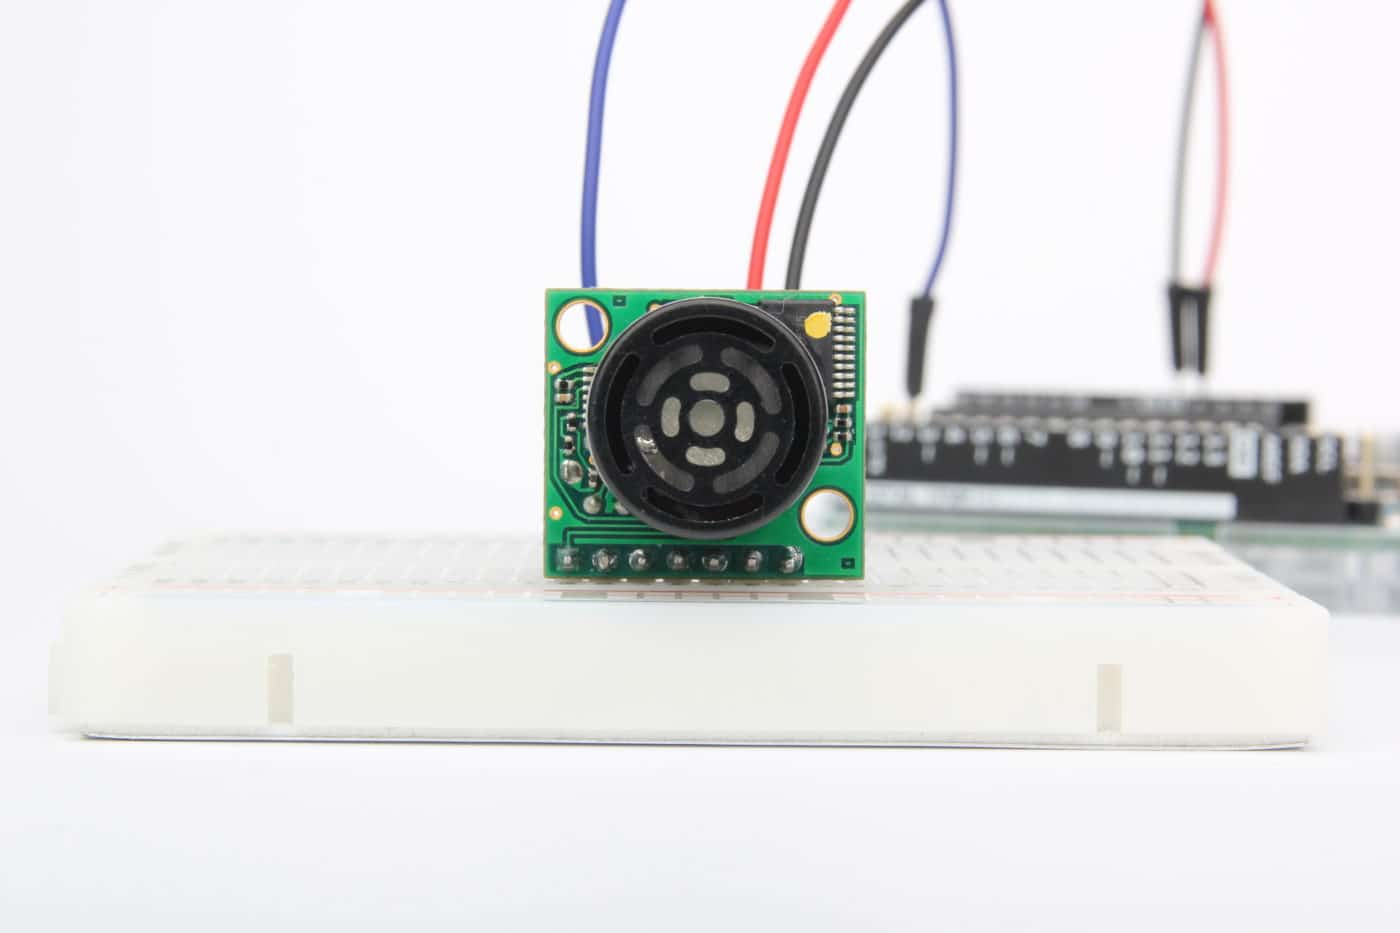 mb1240 aruduino ultrasonic sensor